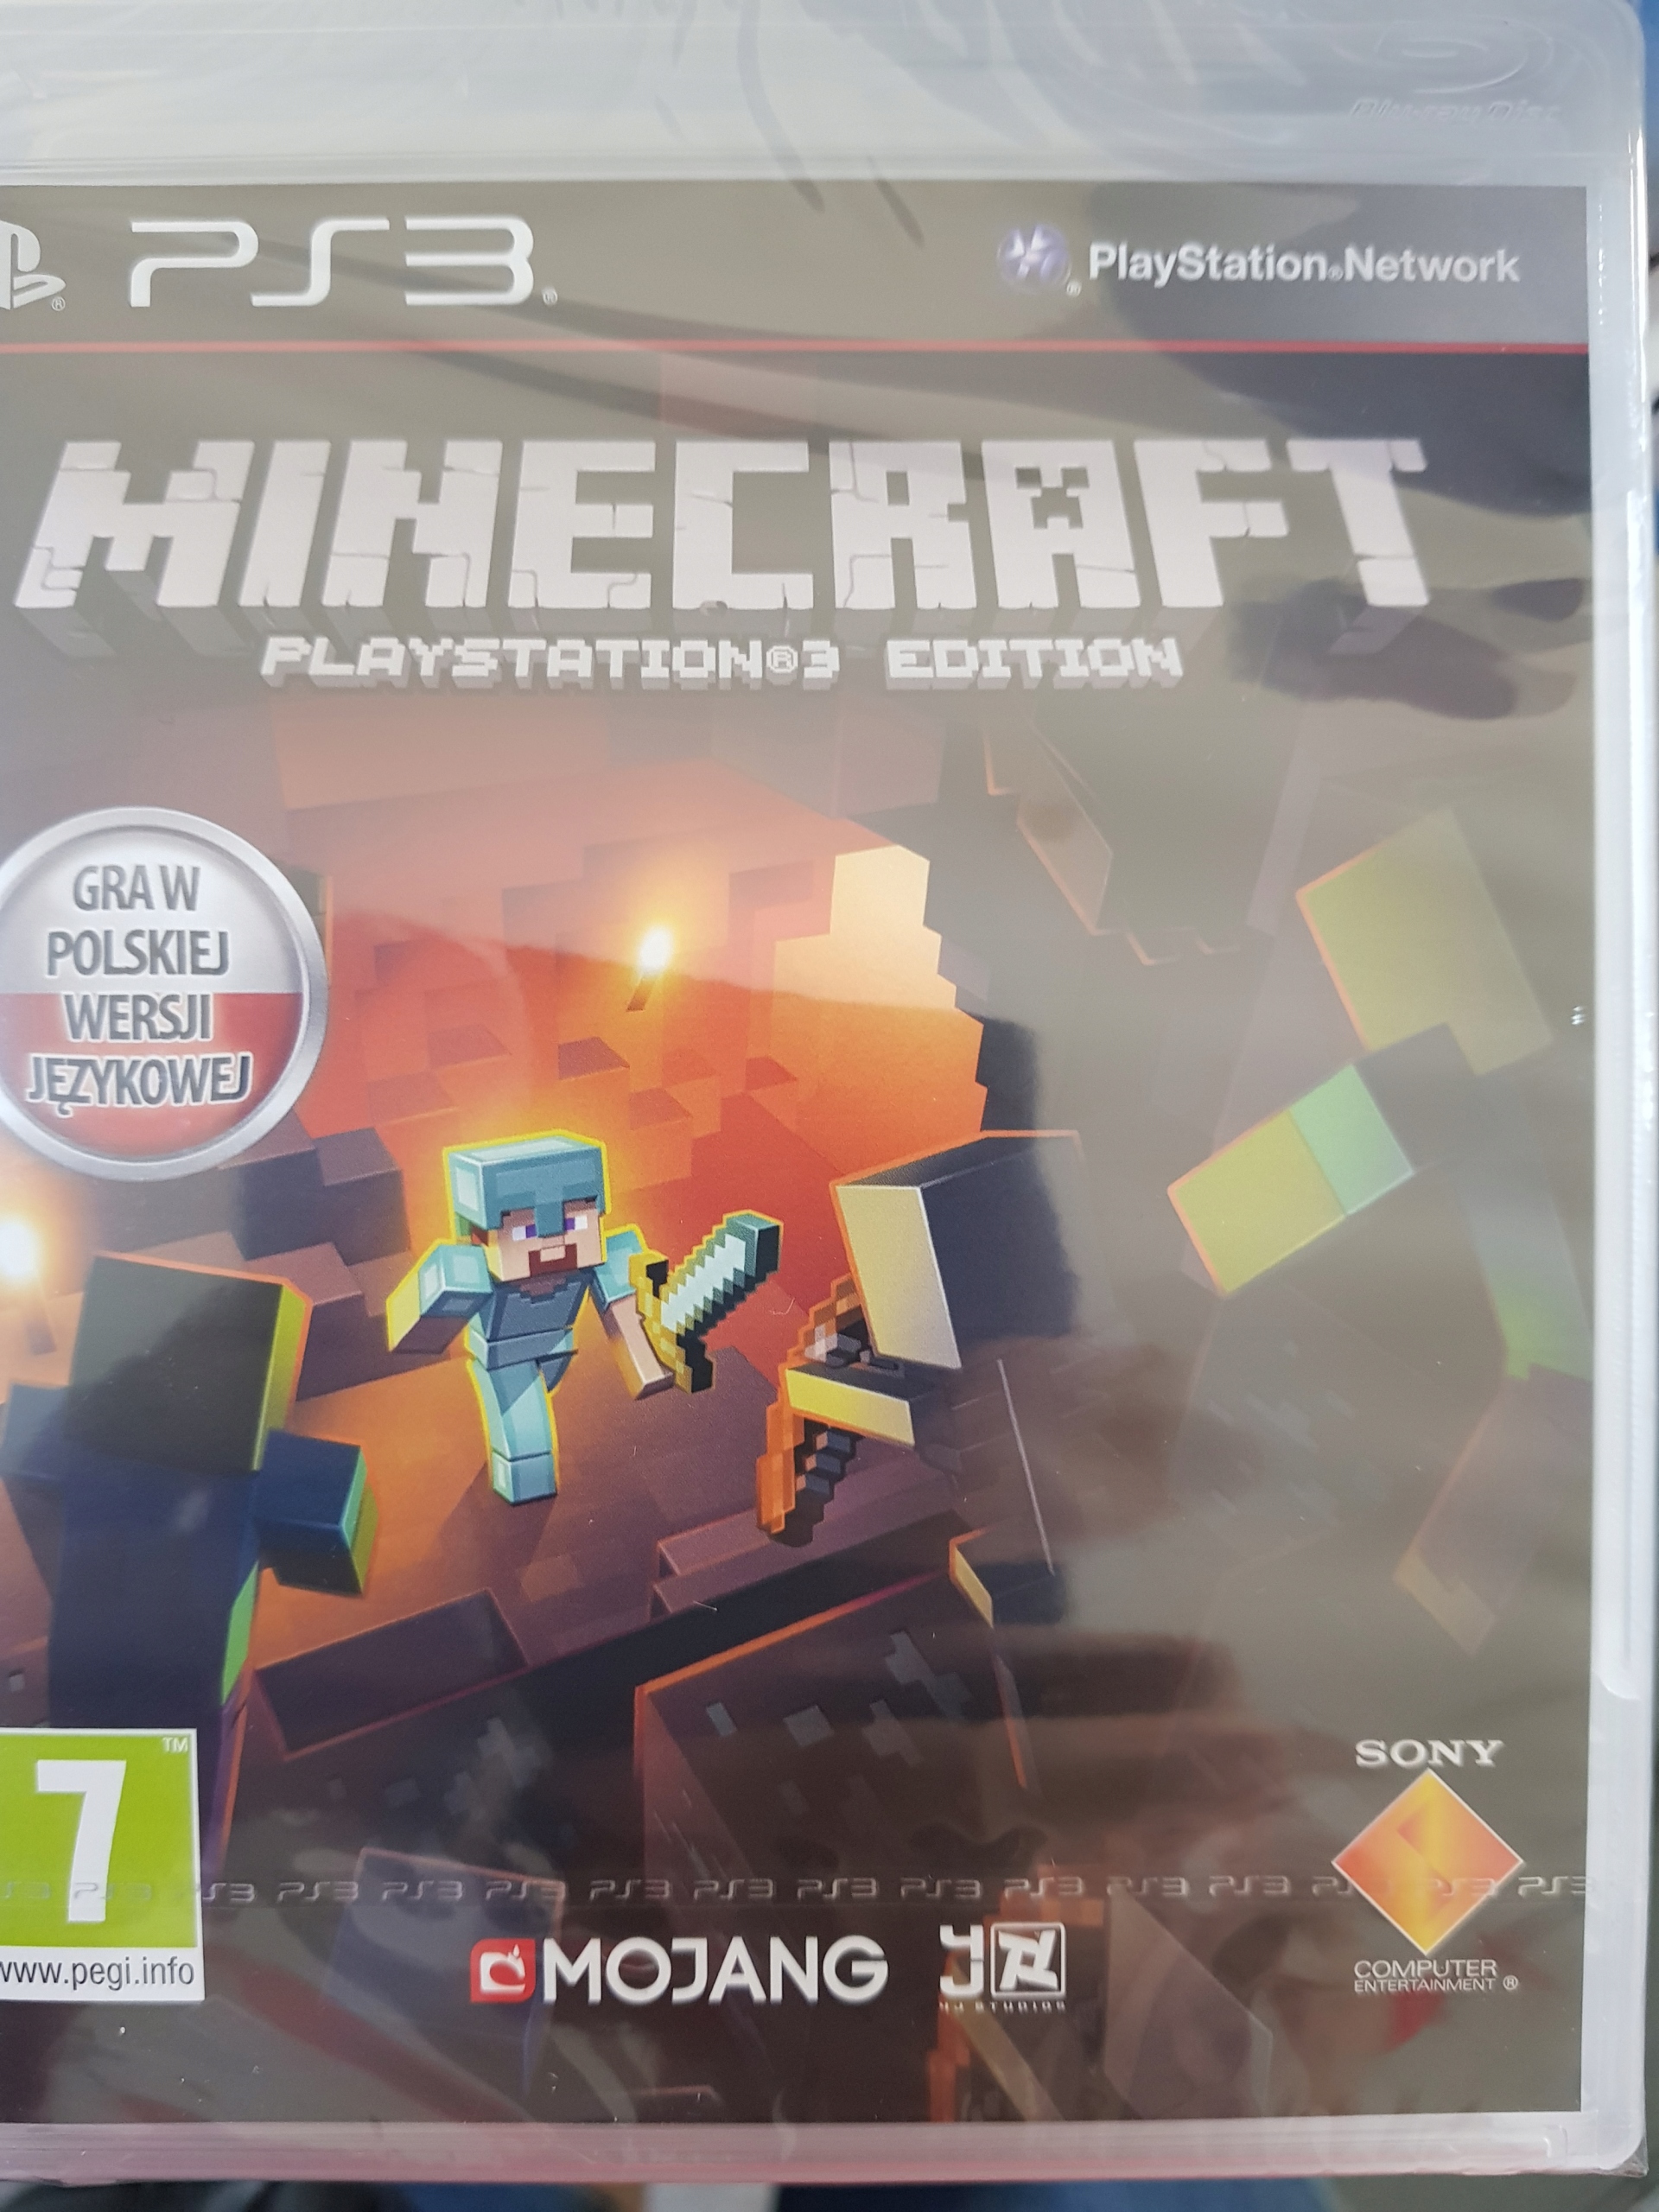 Minecraft: PlayStation 3 Edition, PlayStation.Blog